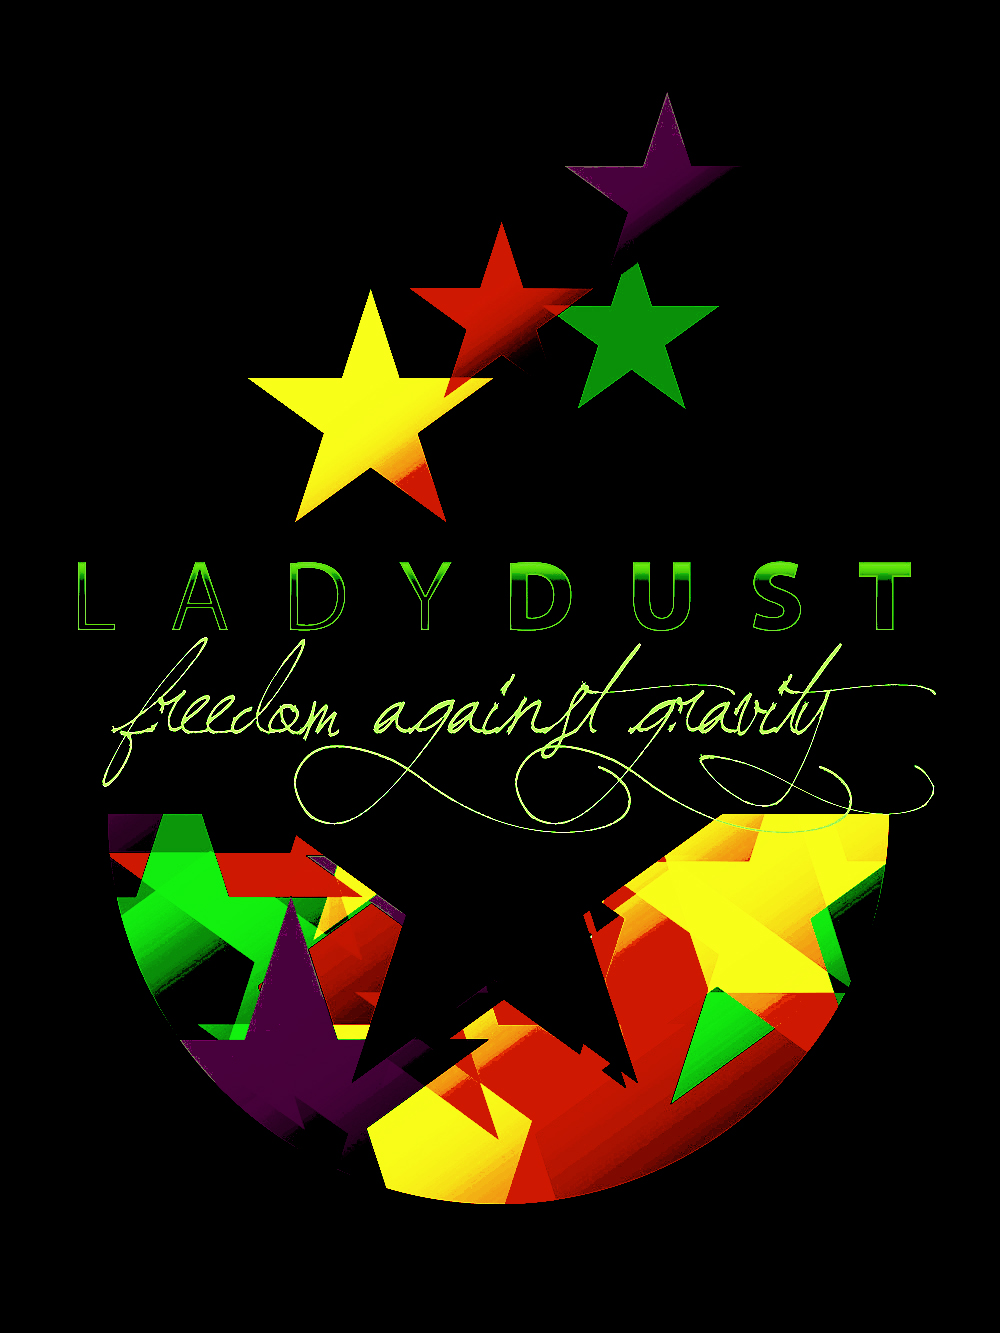 by Ladydust